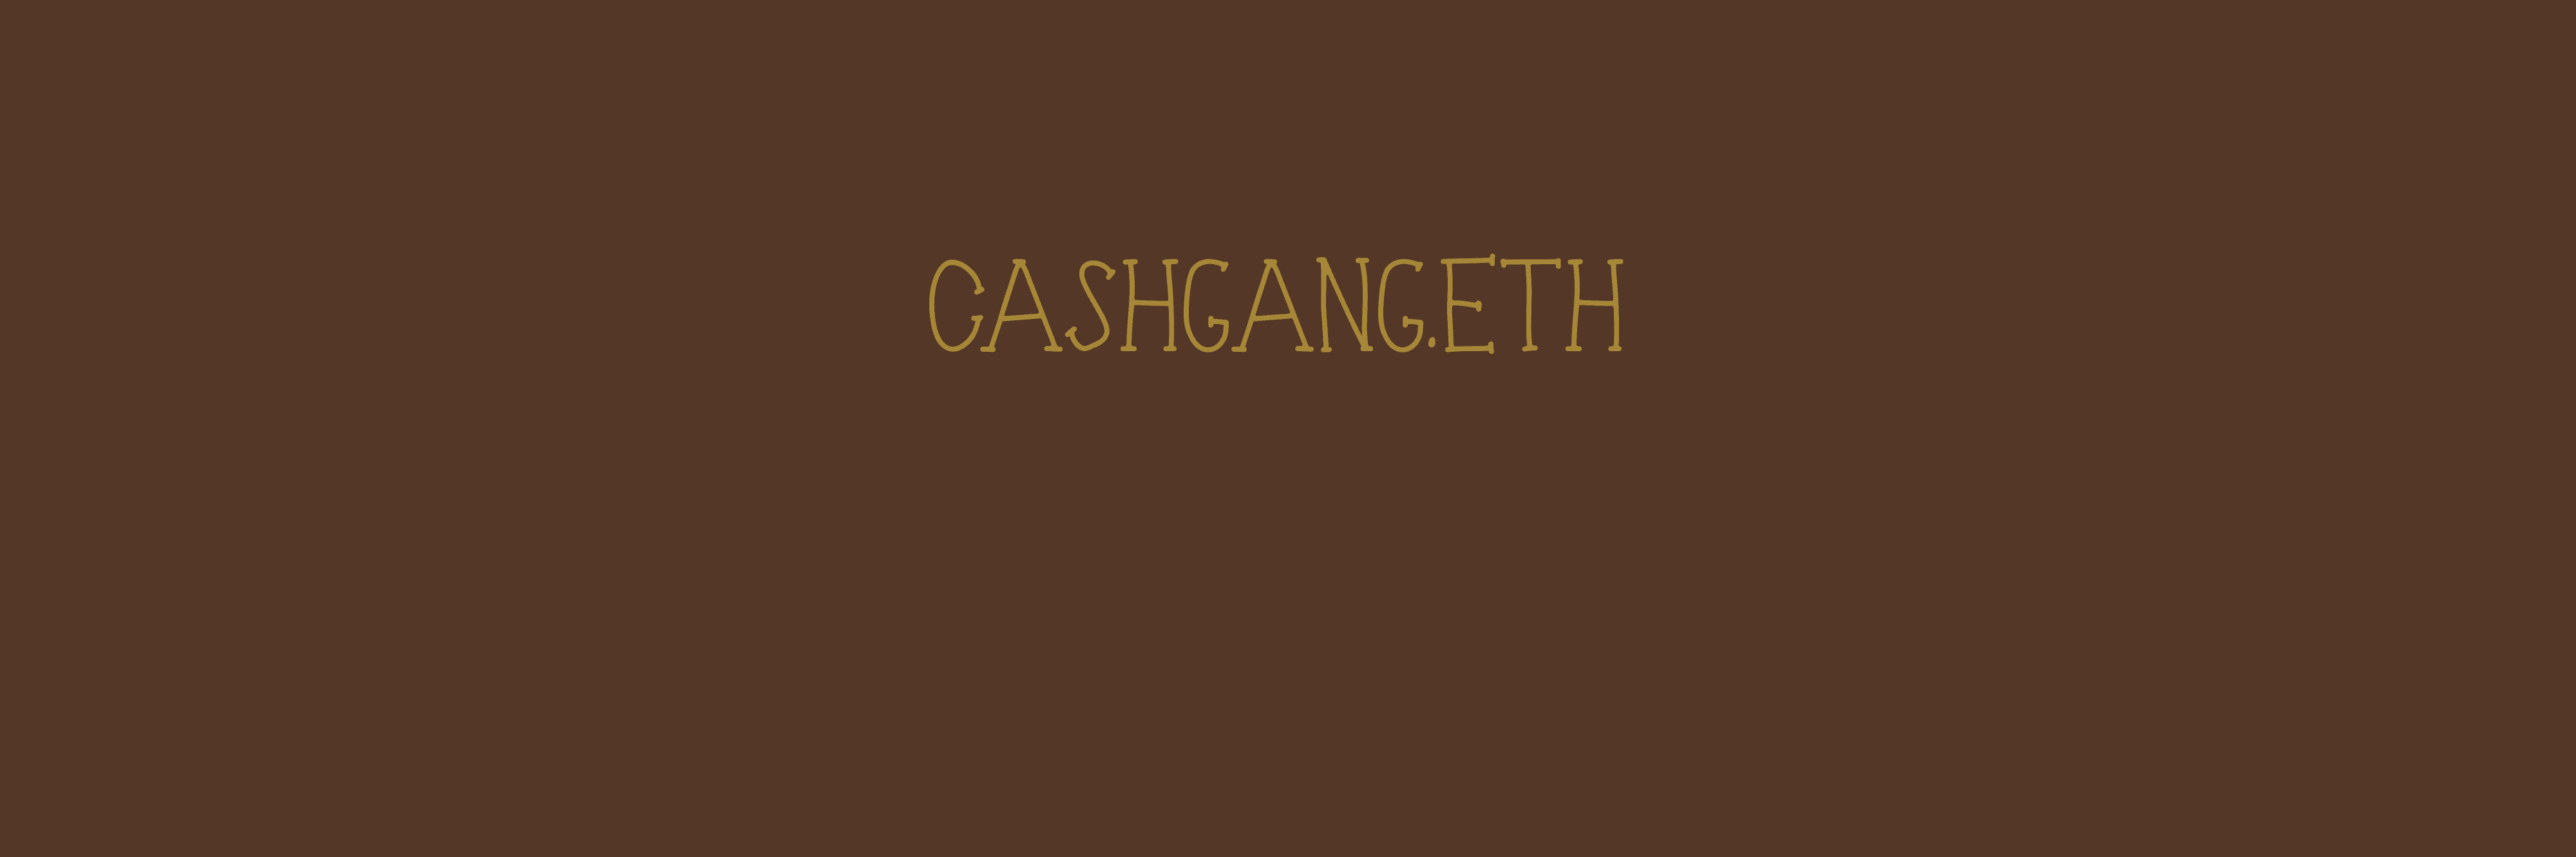 cashgang-eth banner